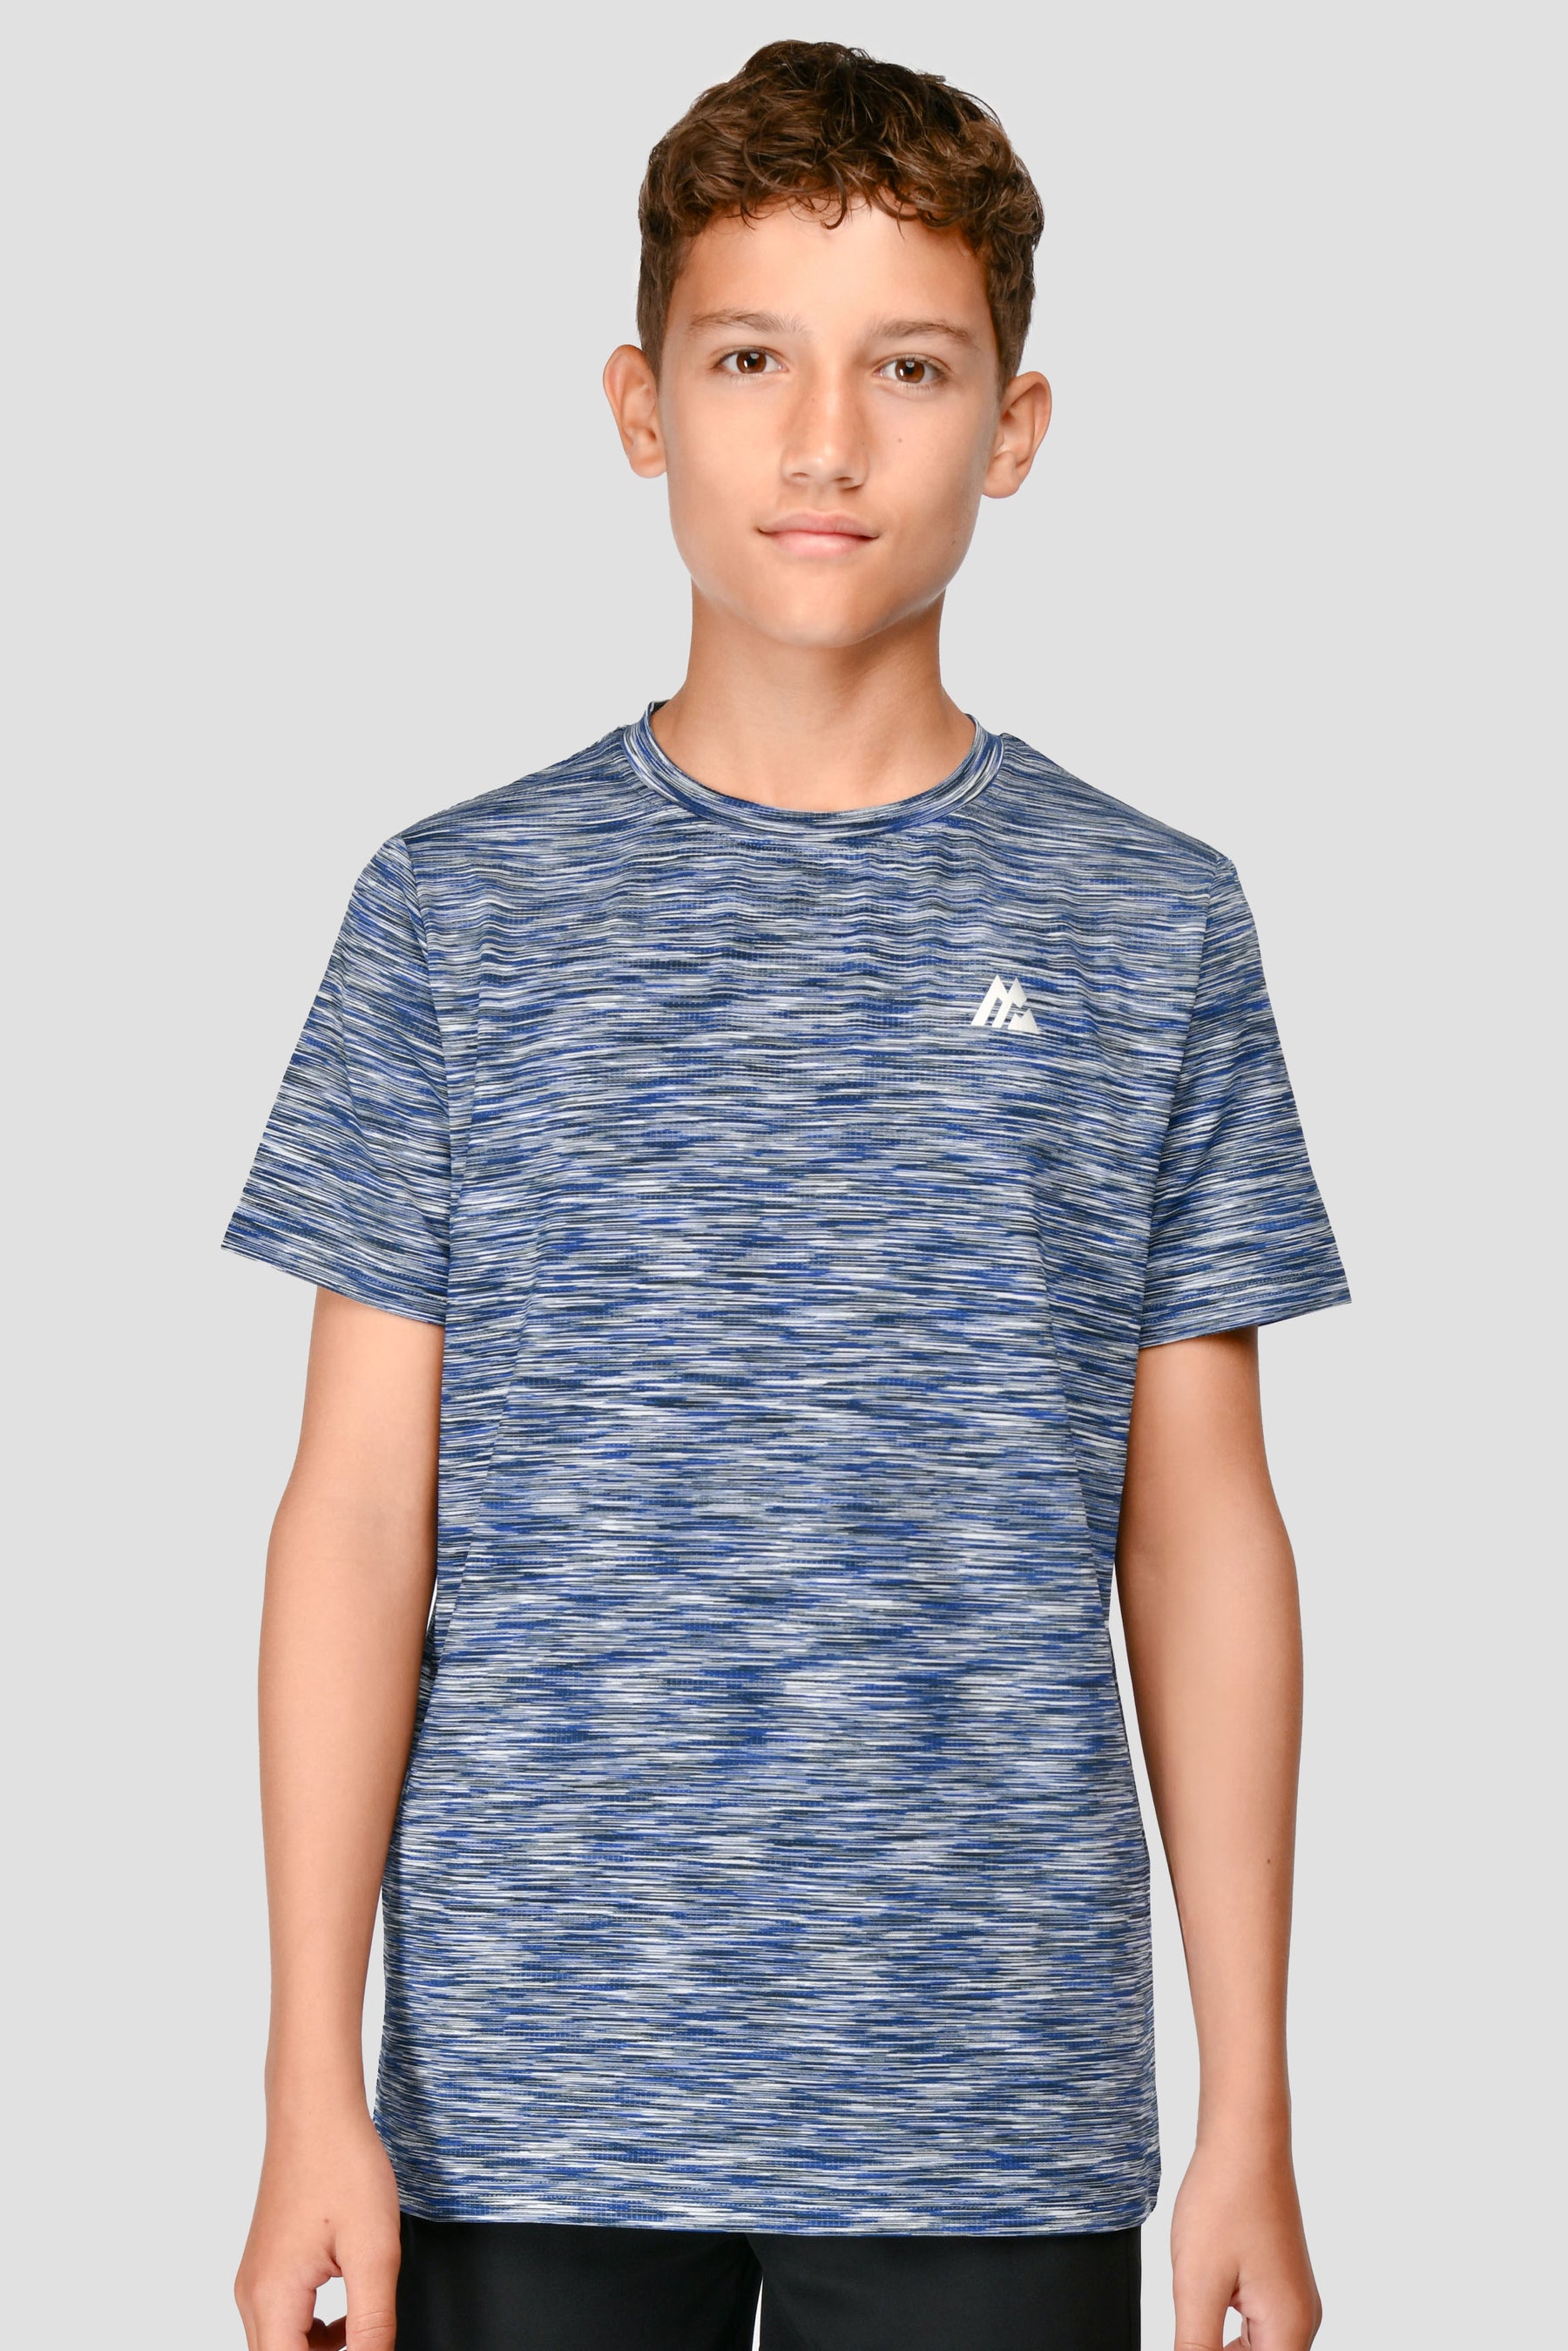 Junior Trail 2.0 T-Shirt - Navy/Blue/White Multi